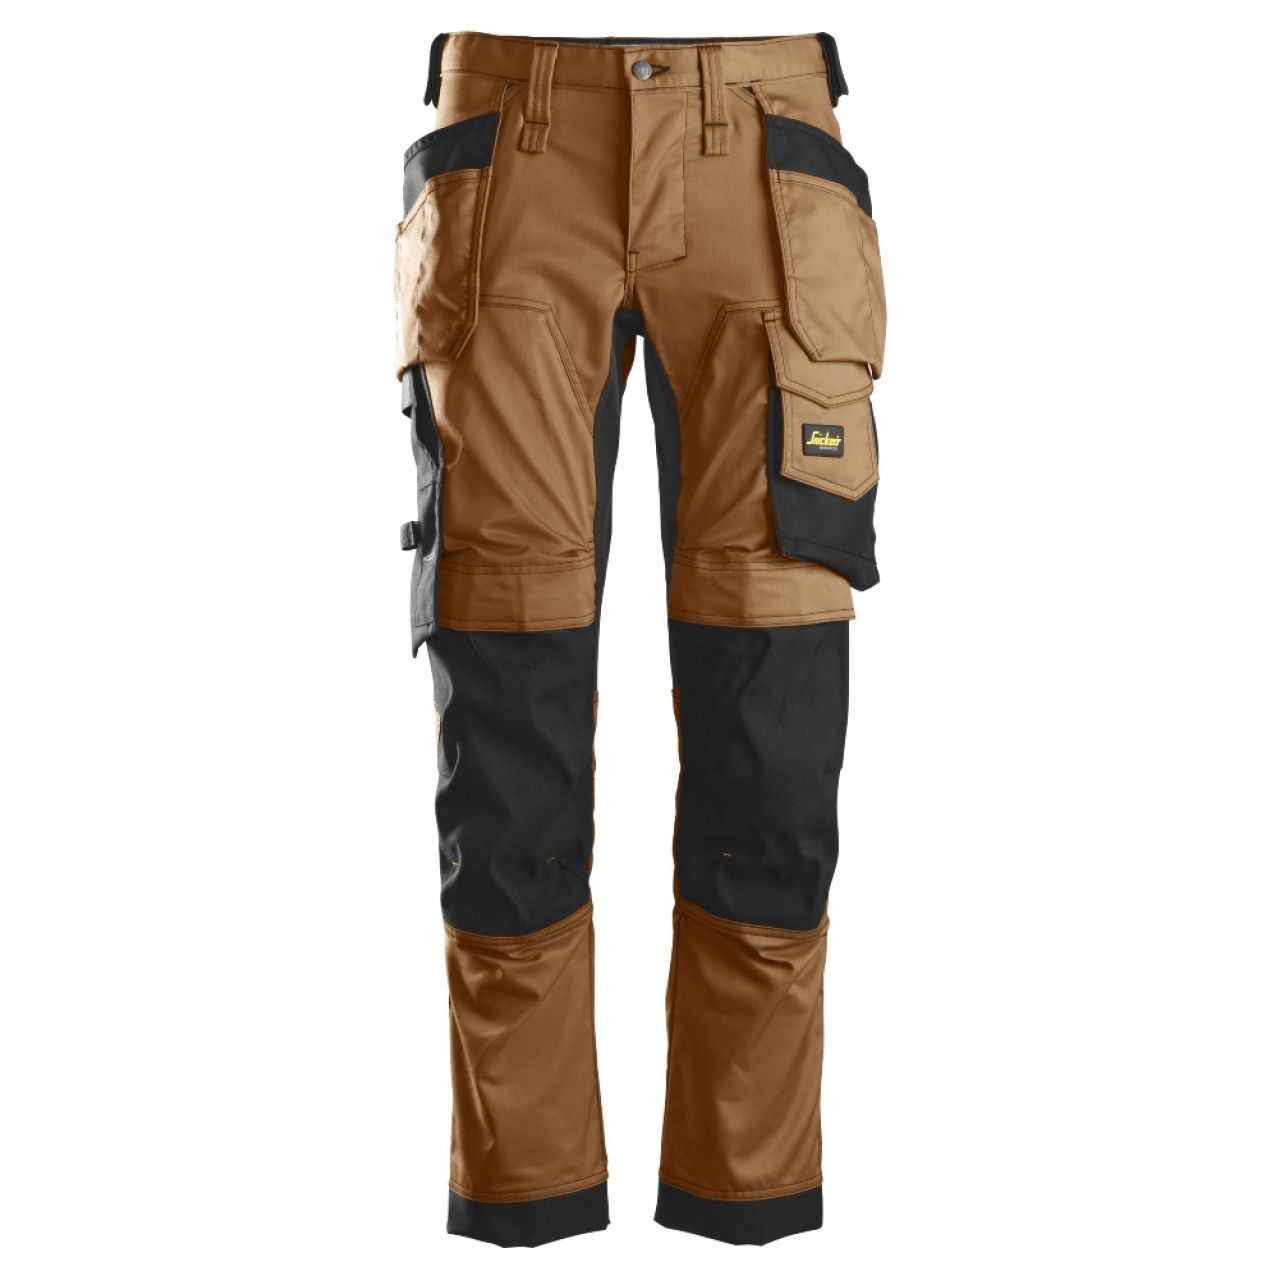 6241 Pantalones largos de trabajo elásticos con bolsillos flotantes AllroundWork marron-negro talla 54